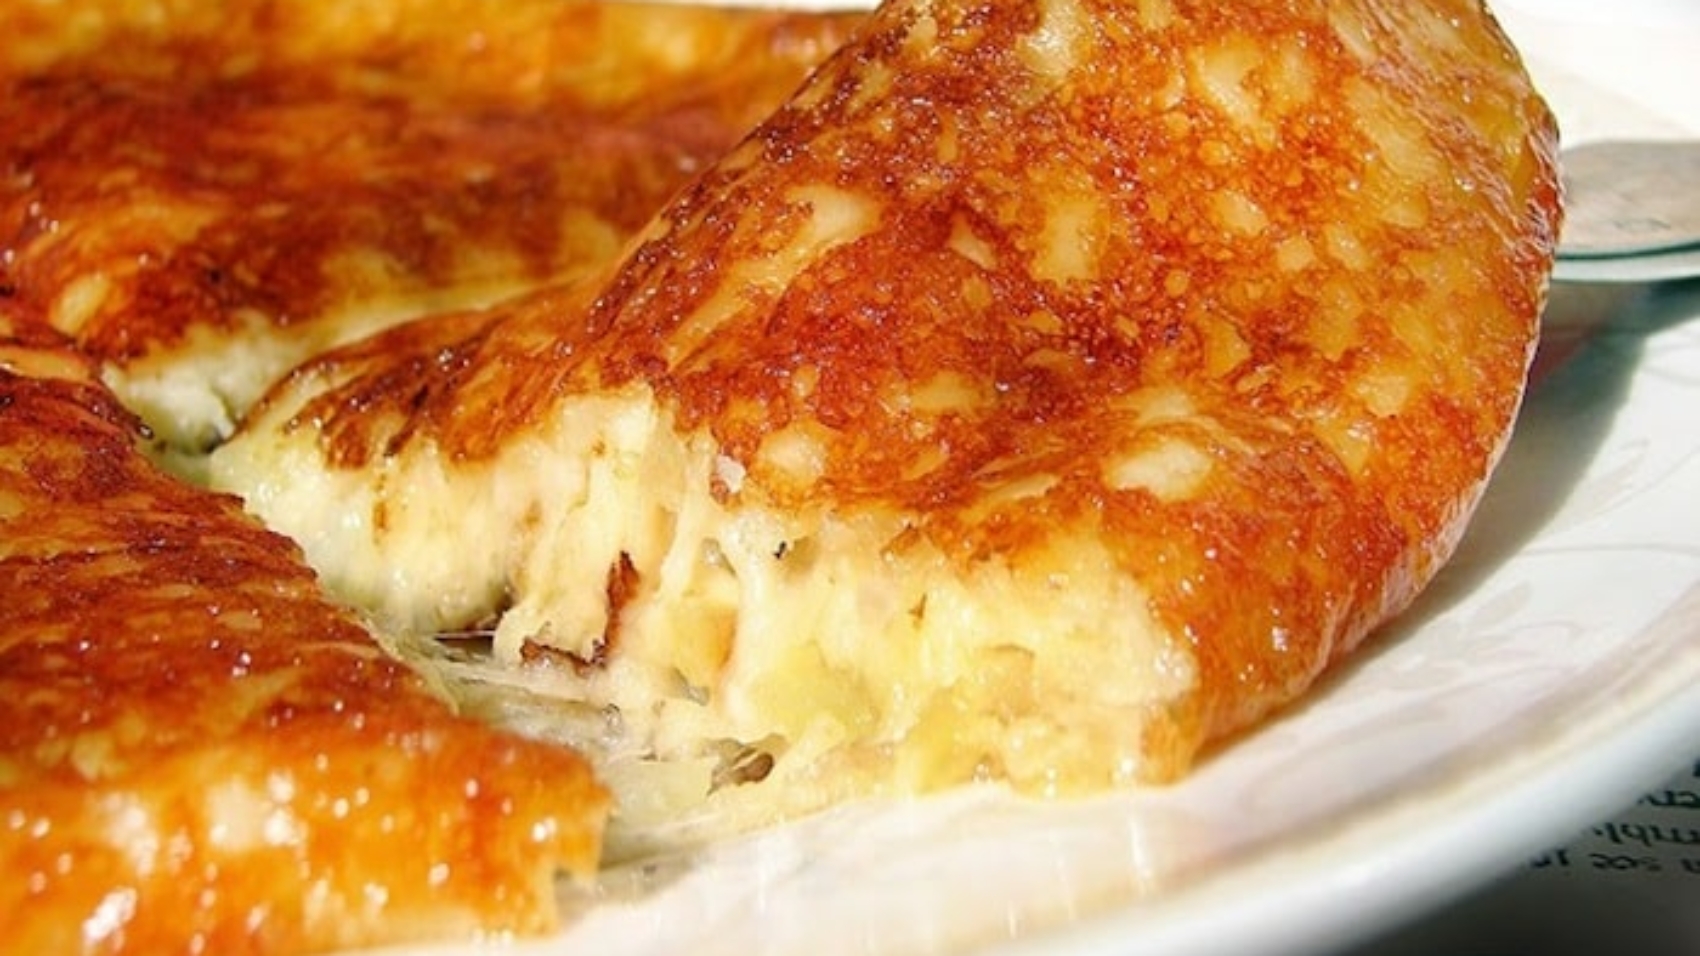 frico cibo tipico fvg con formaggio e patate